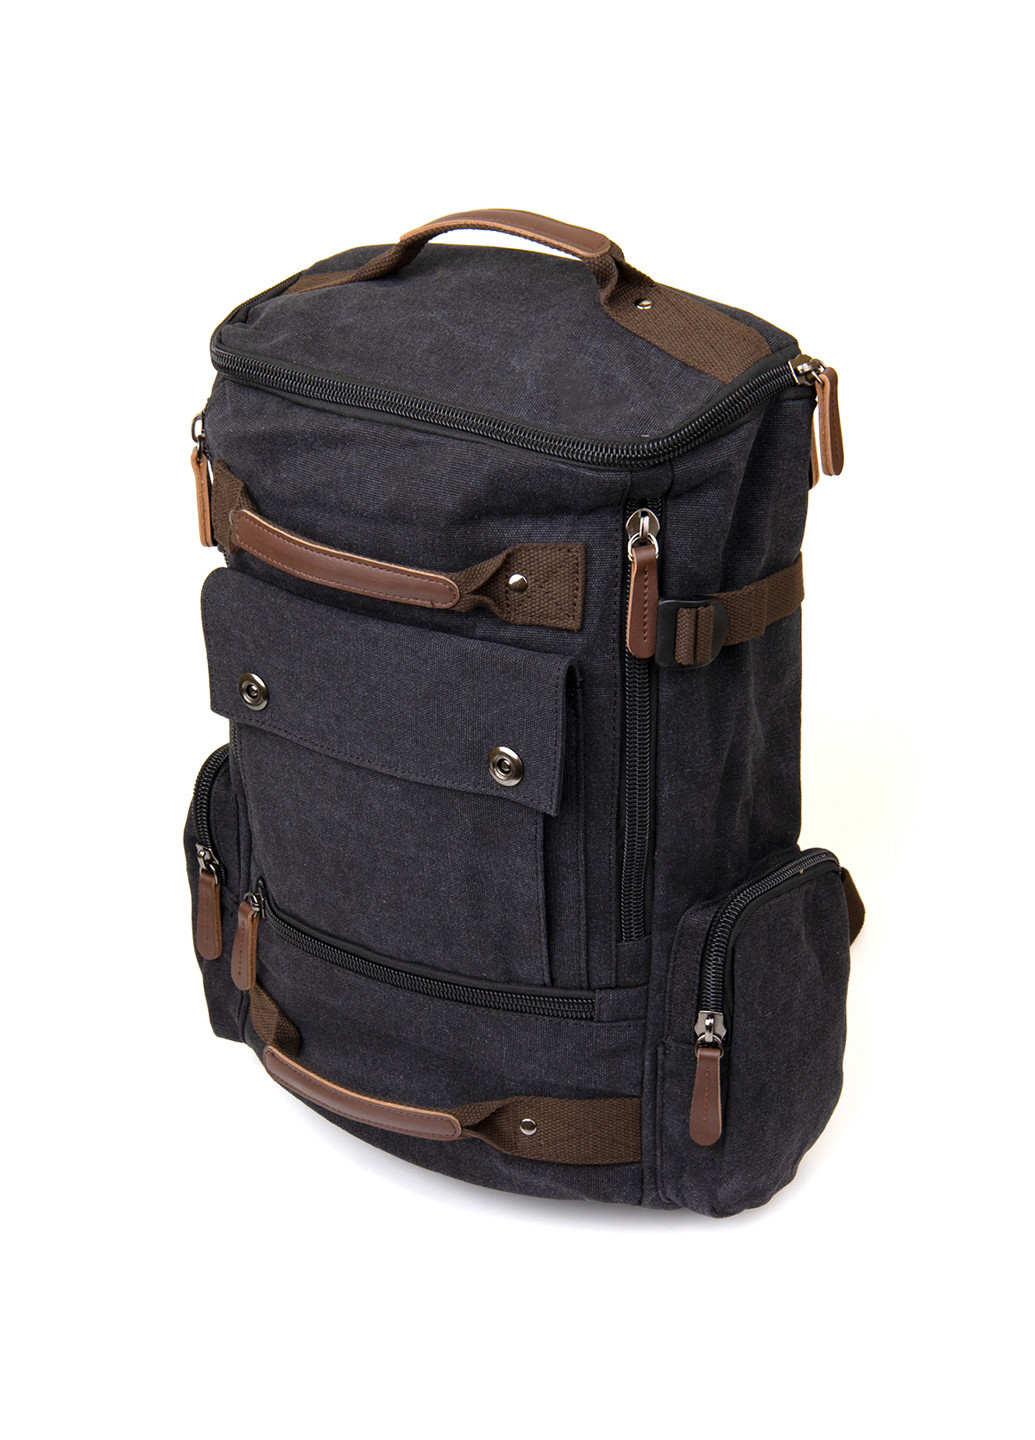 Текстильный рюкзак 31х45х16 см Vintage (242188848)